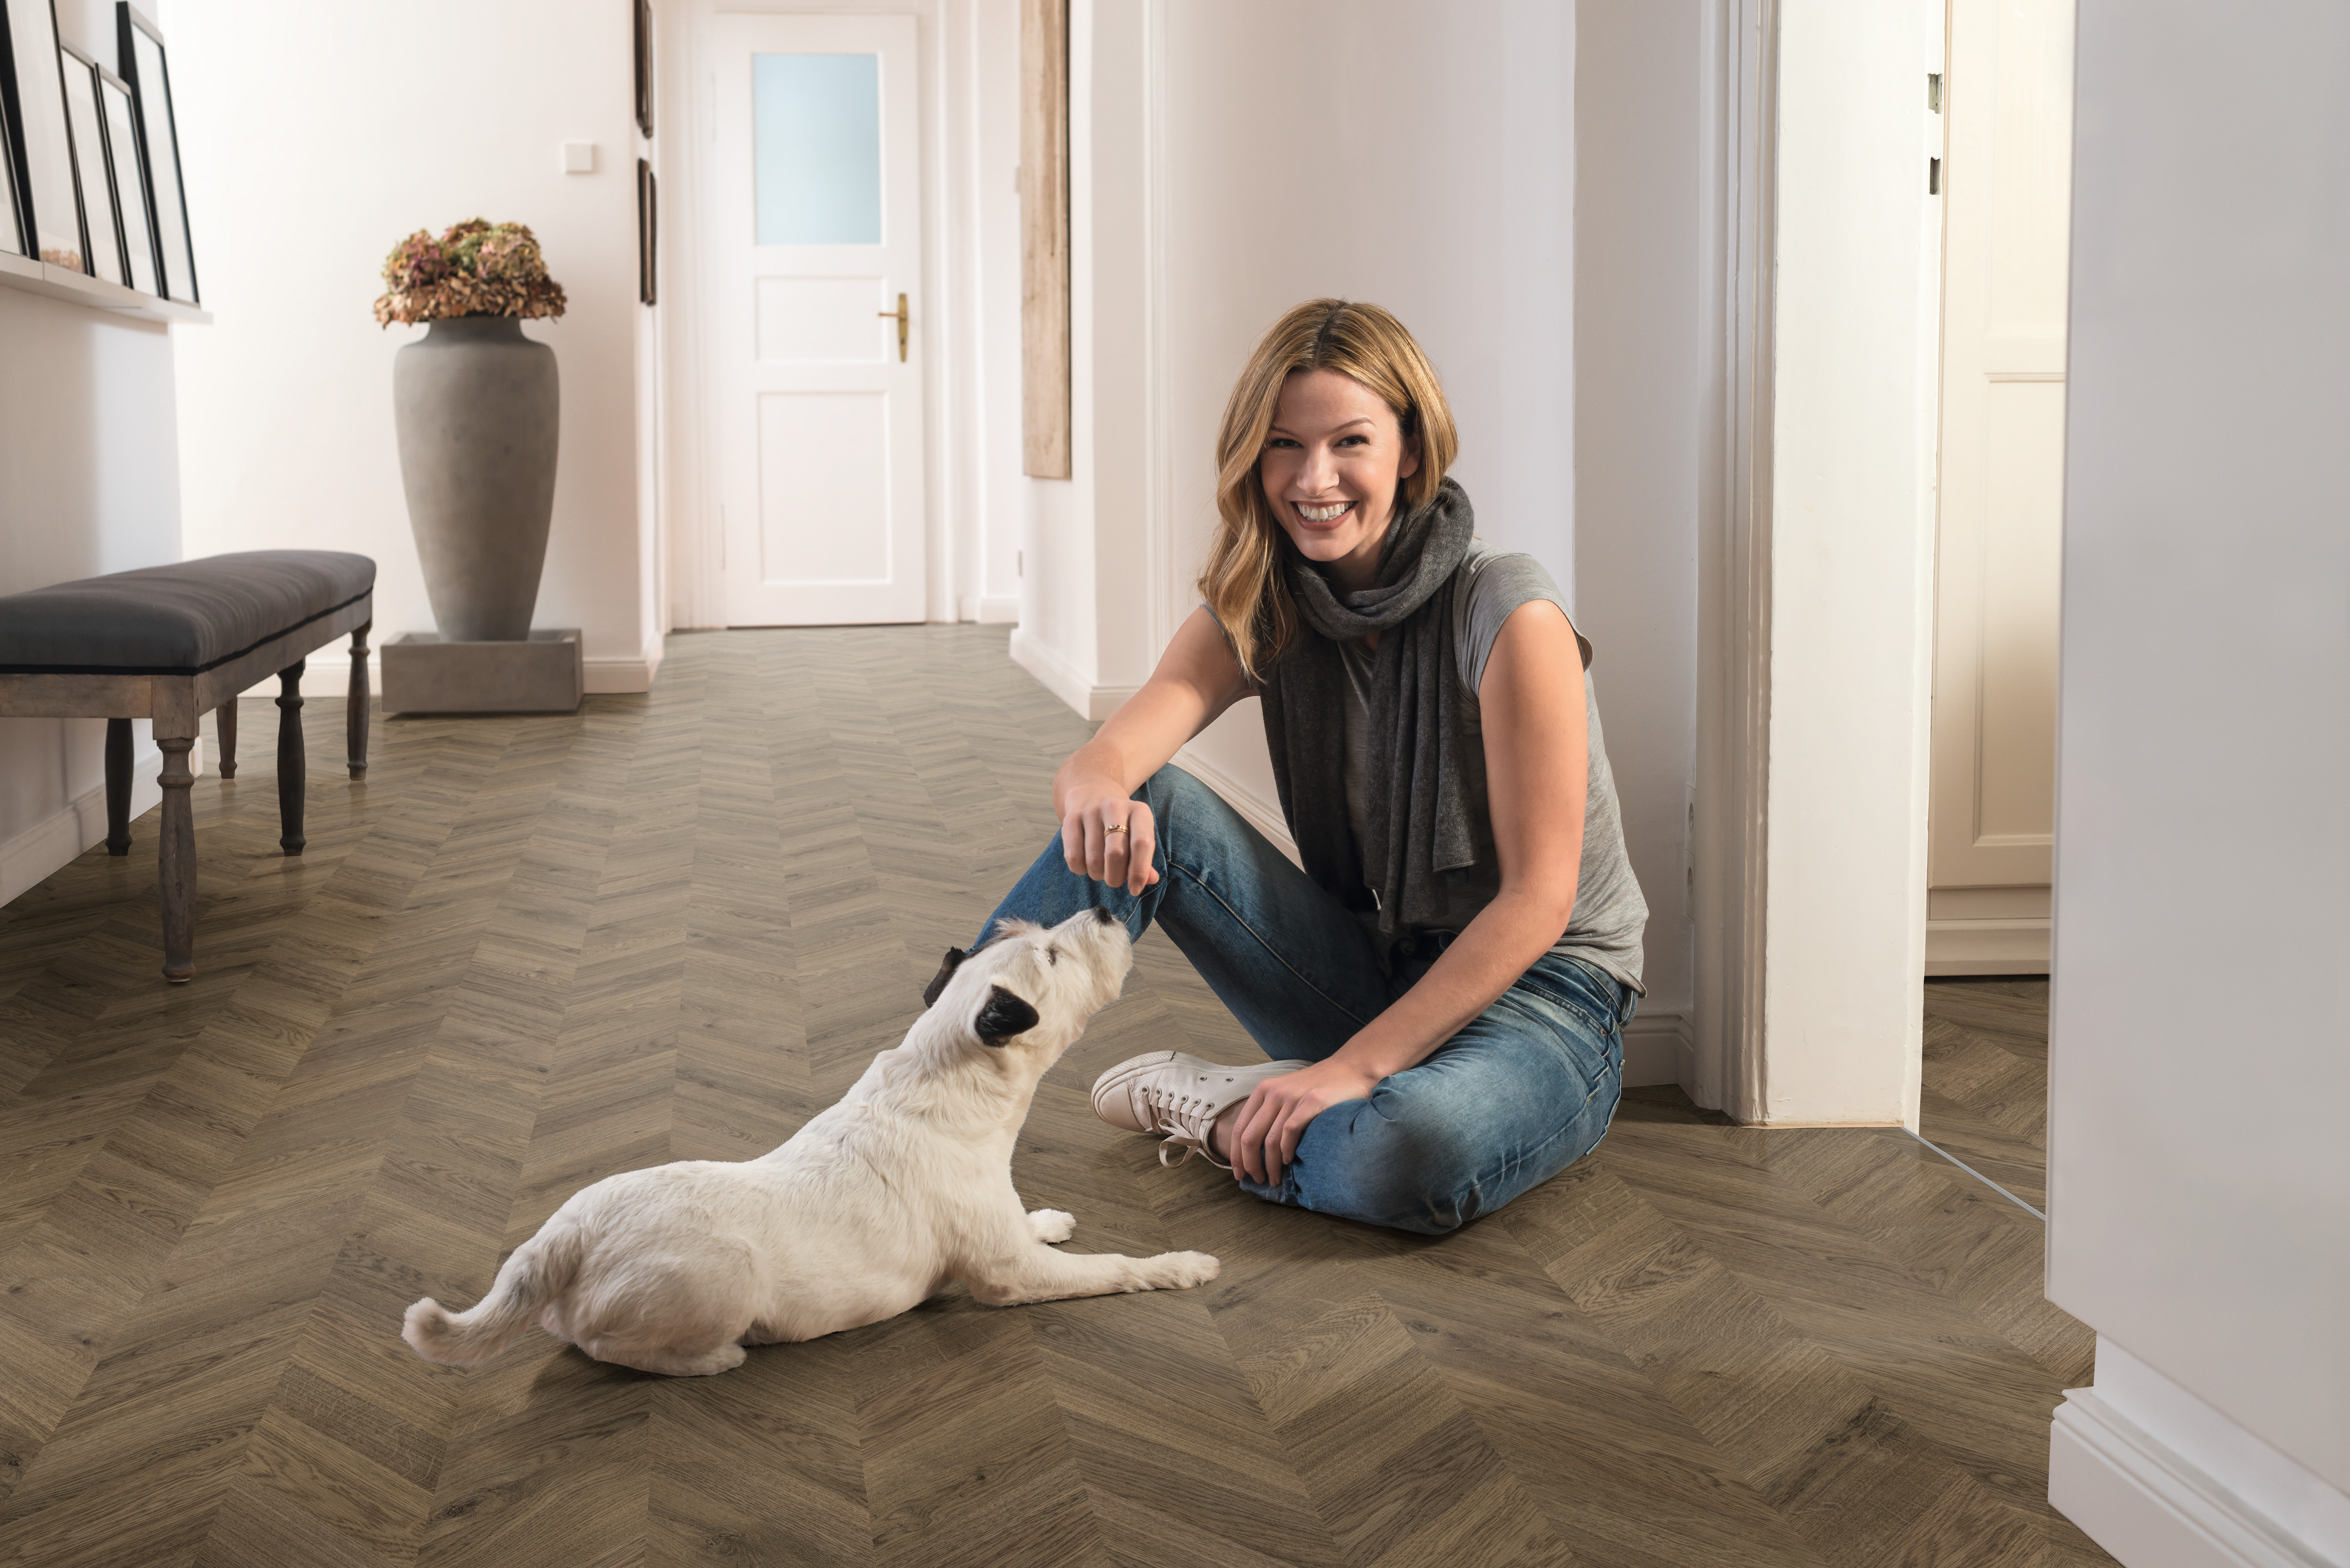 EGGER flooring - high-quality laminate